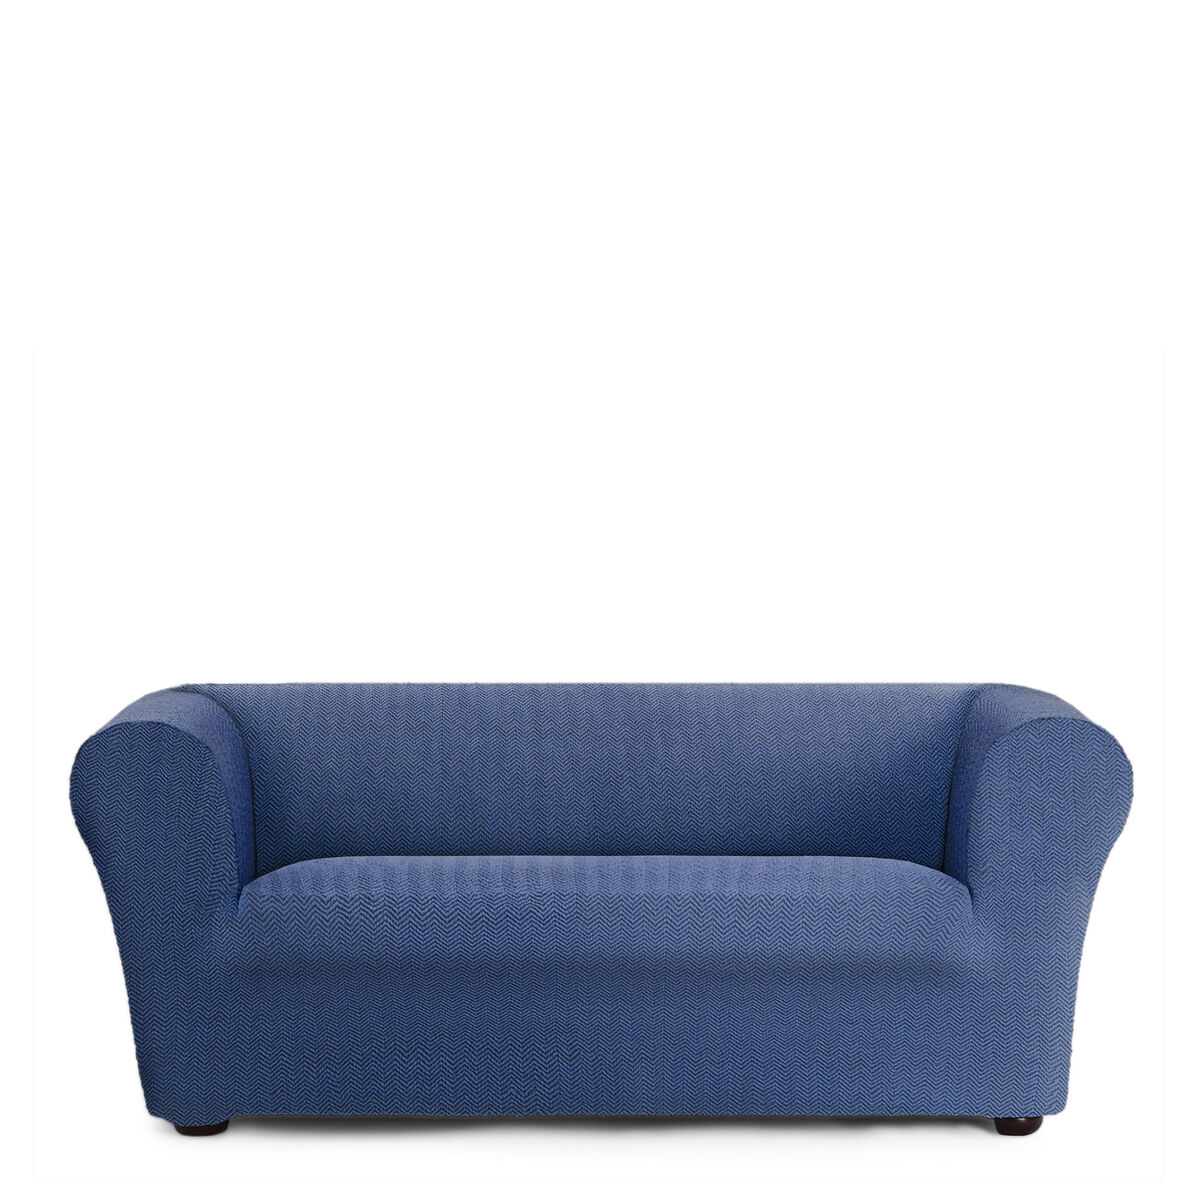 Copertina di divano blu Eysa Jaz 110 x 100 x 180 cm